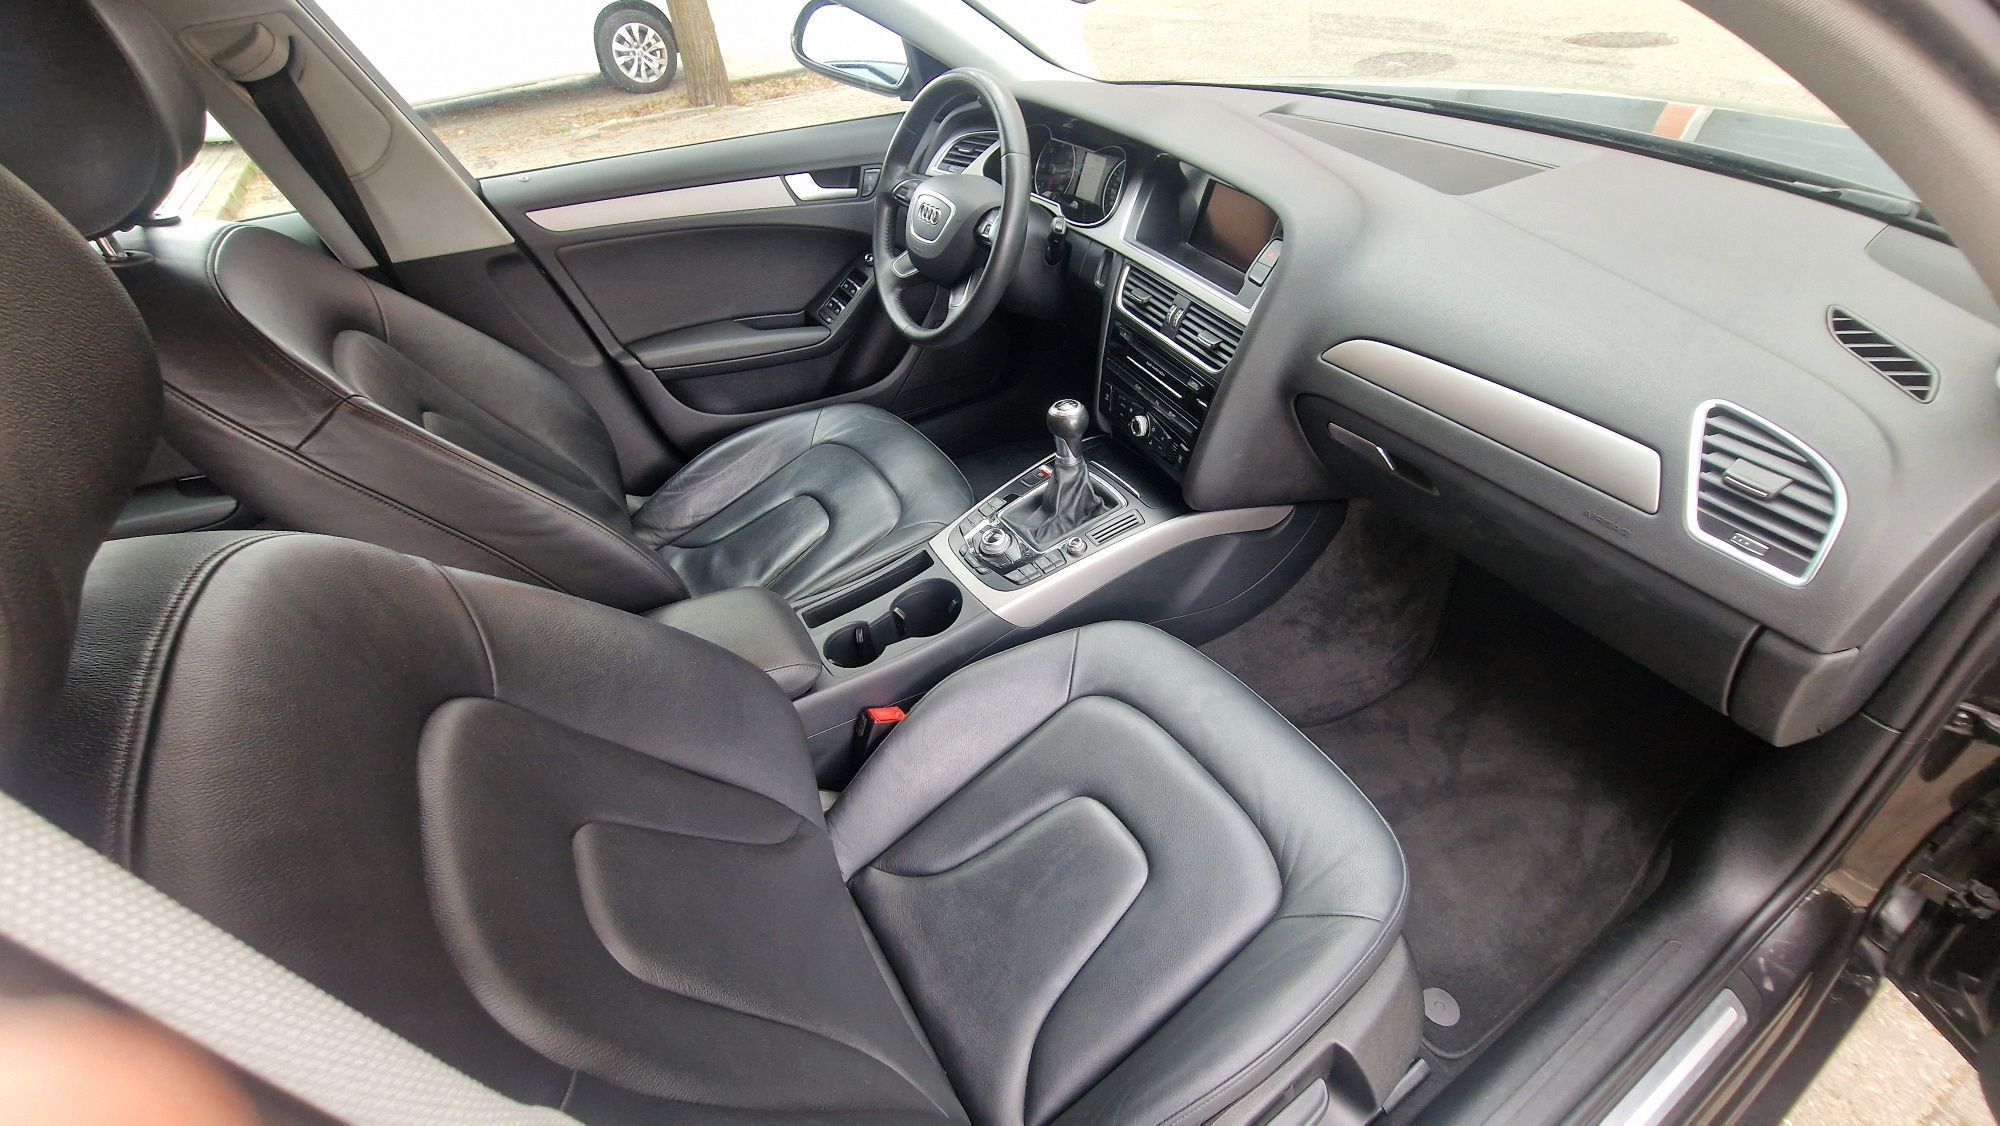 Audi A4 Avant 2.0 TDI  100% pele IMPECAVEL